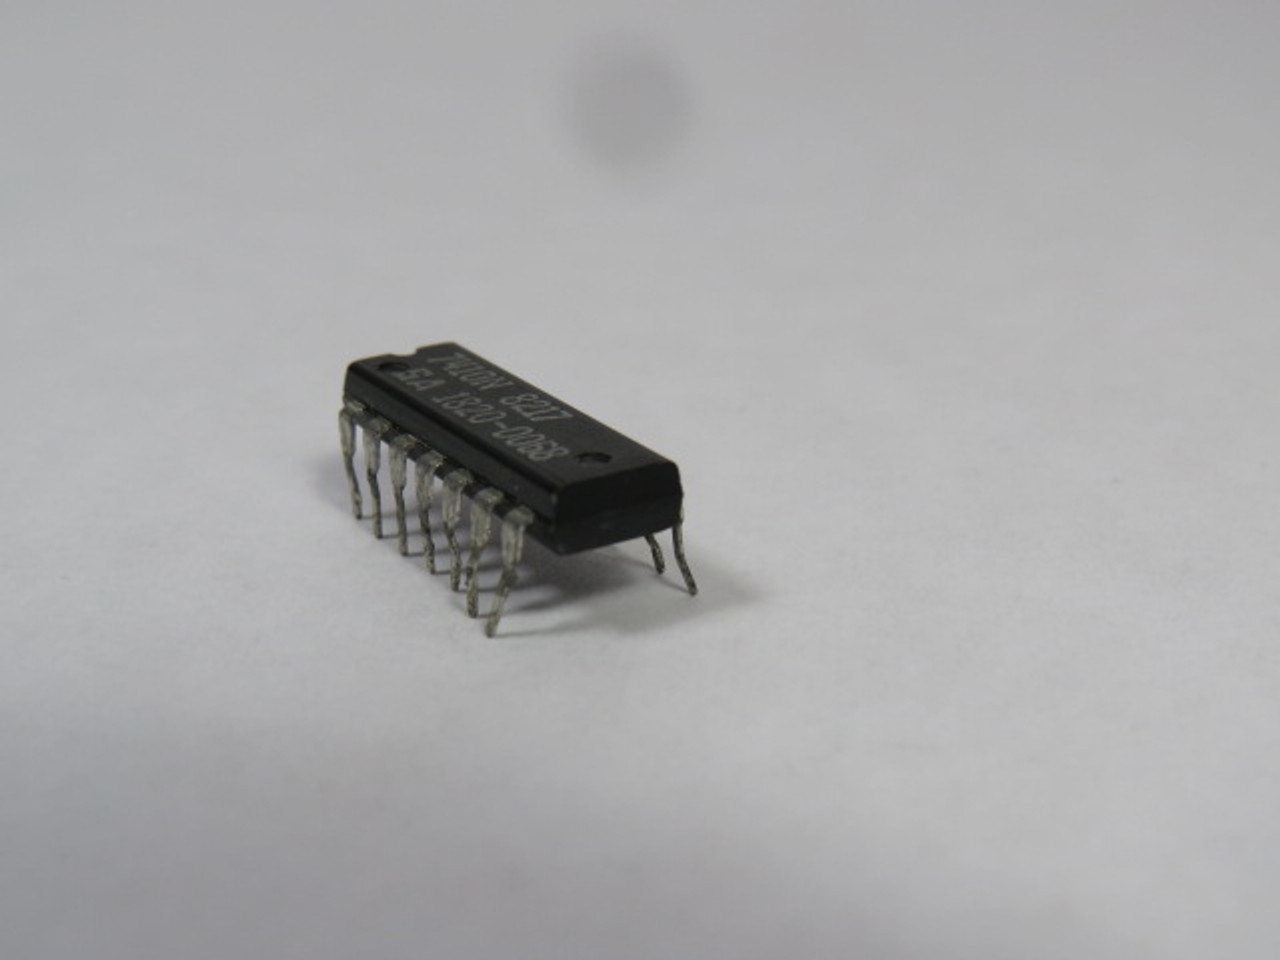 Signetics 7410N Triple 3-Input NAND Gate IC Chip USED